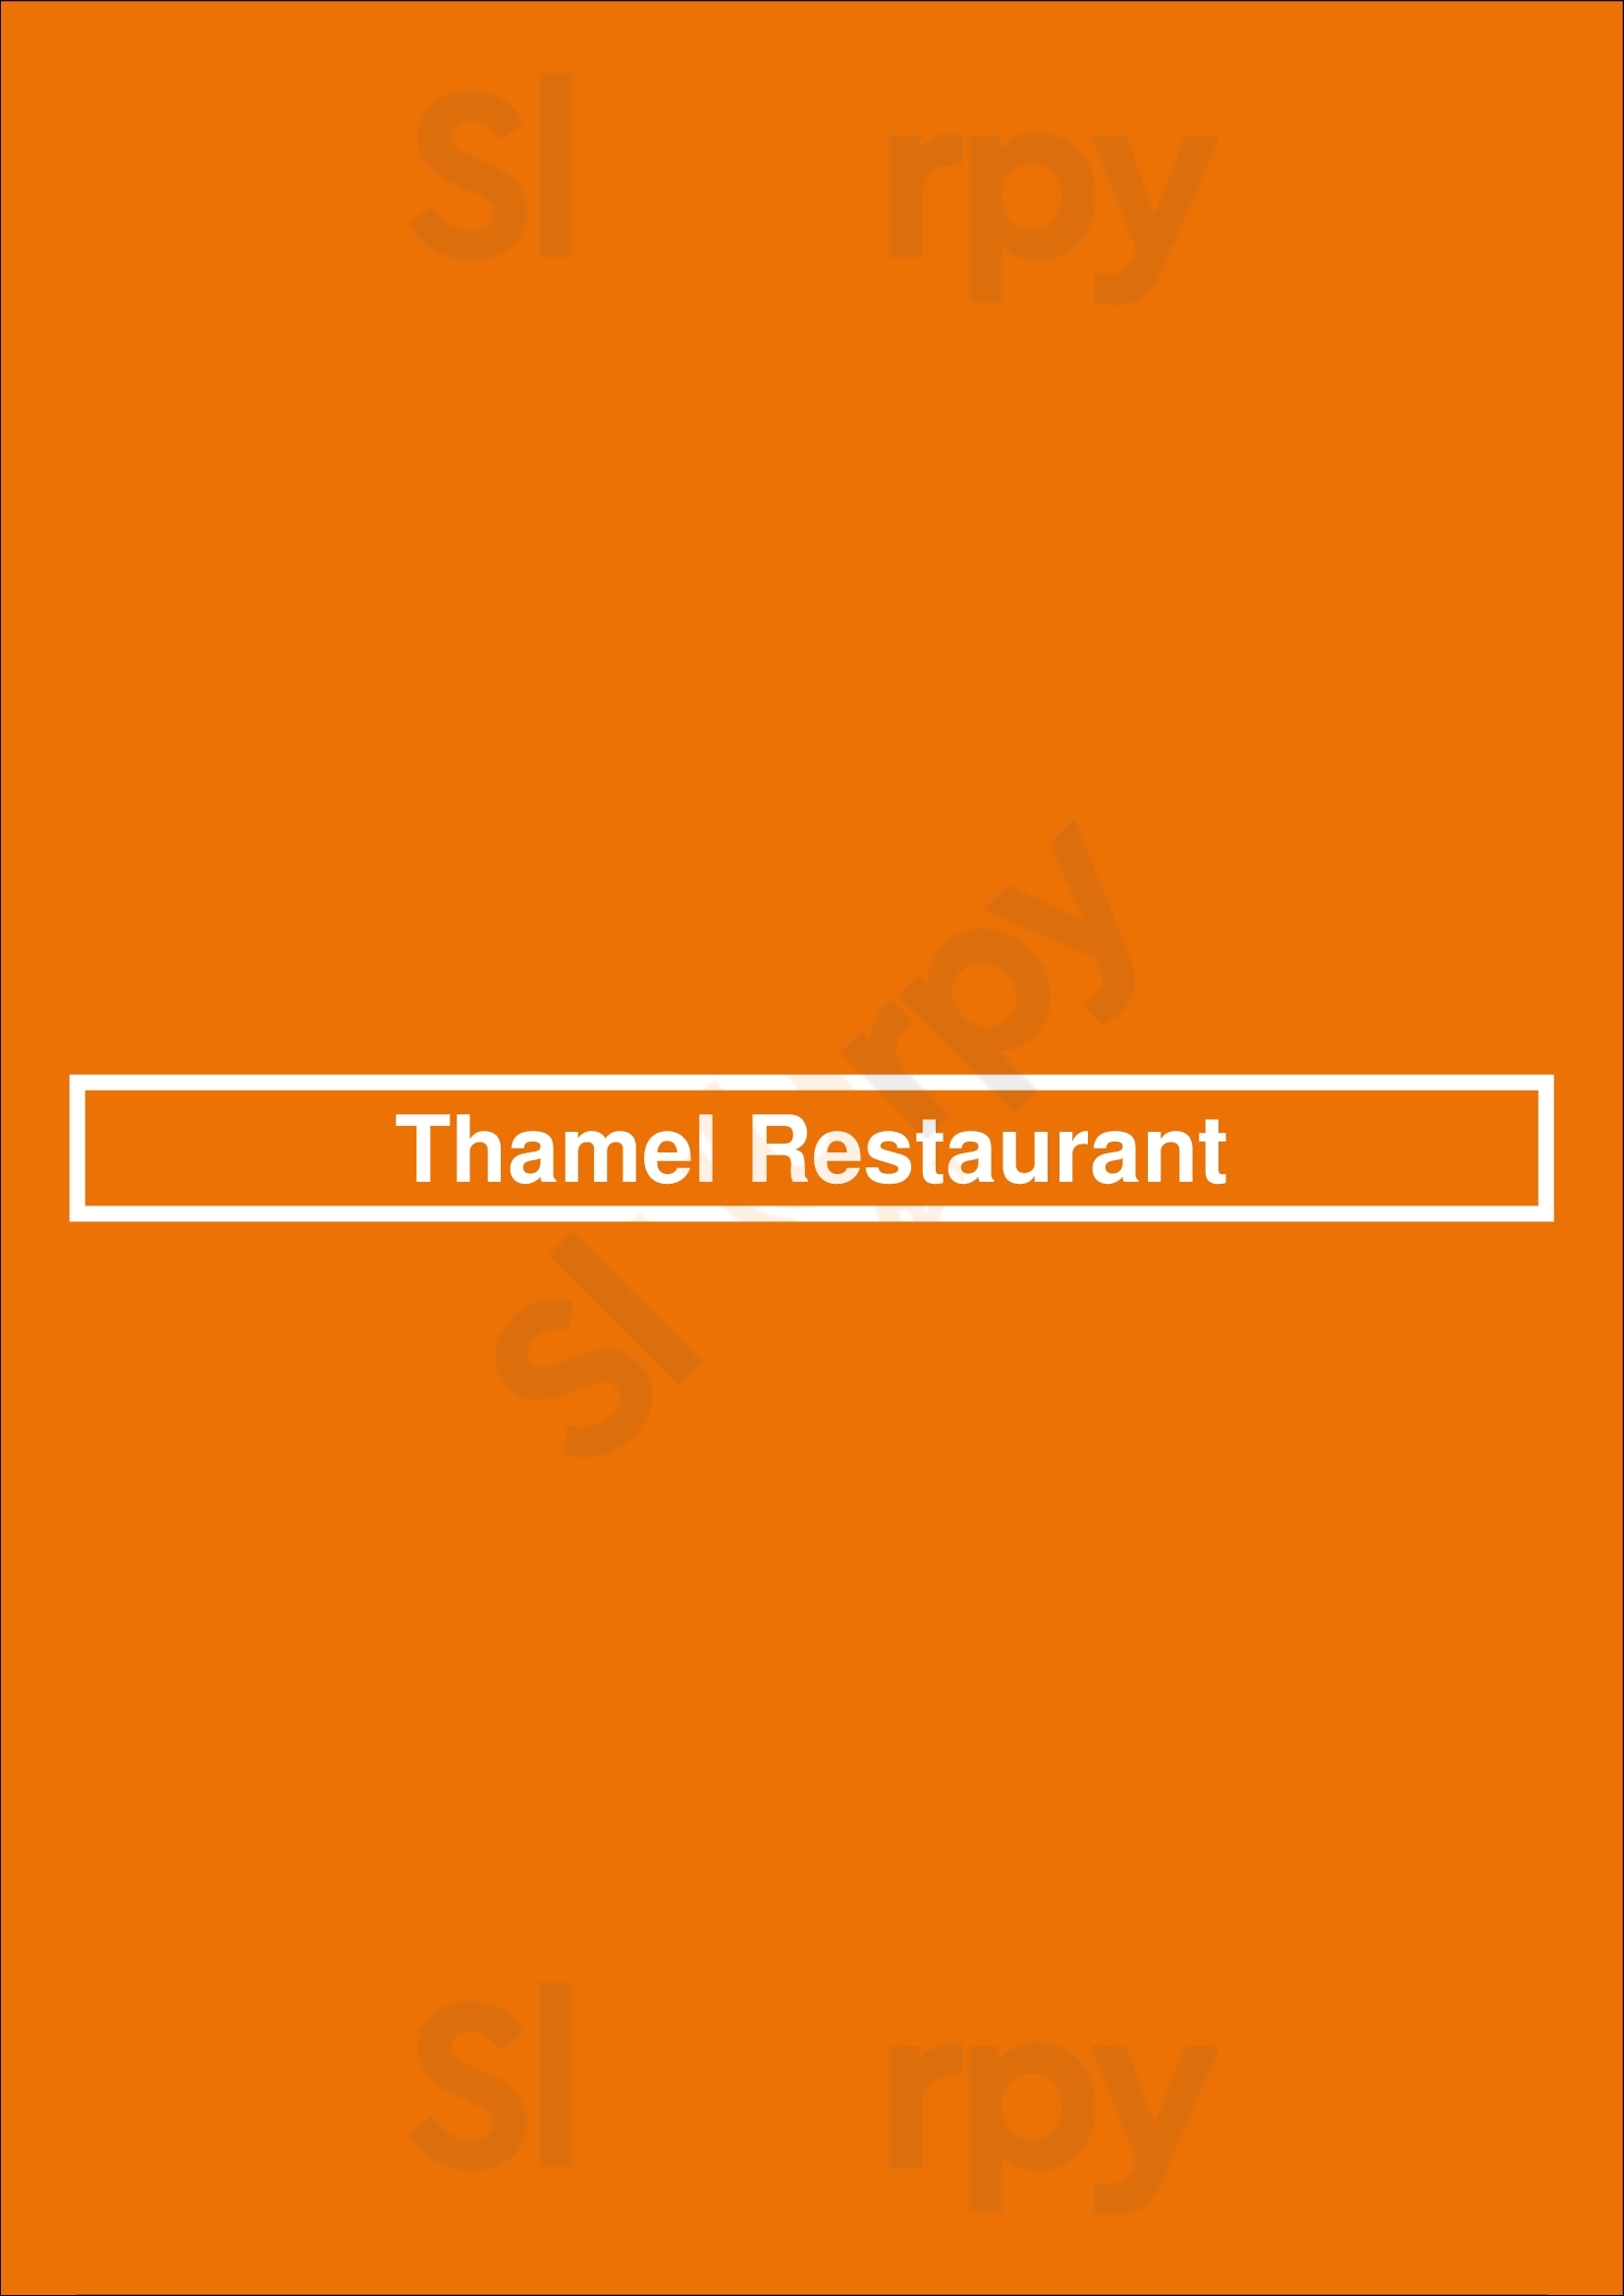 Thamel Restaurant Porto Menu - 1